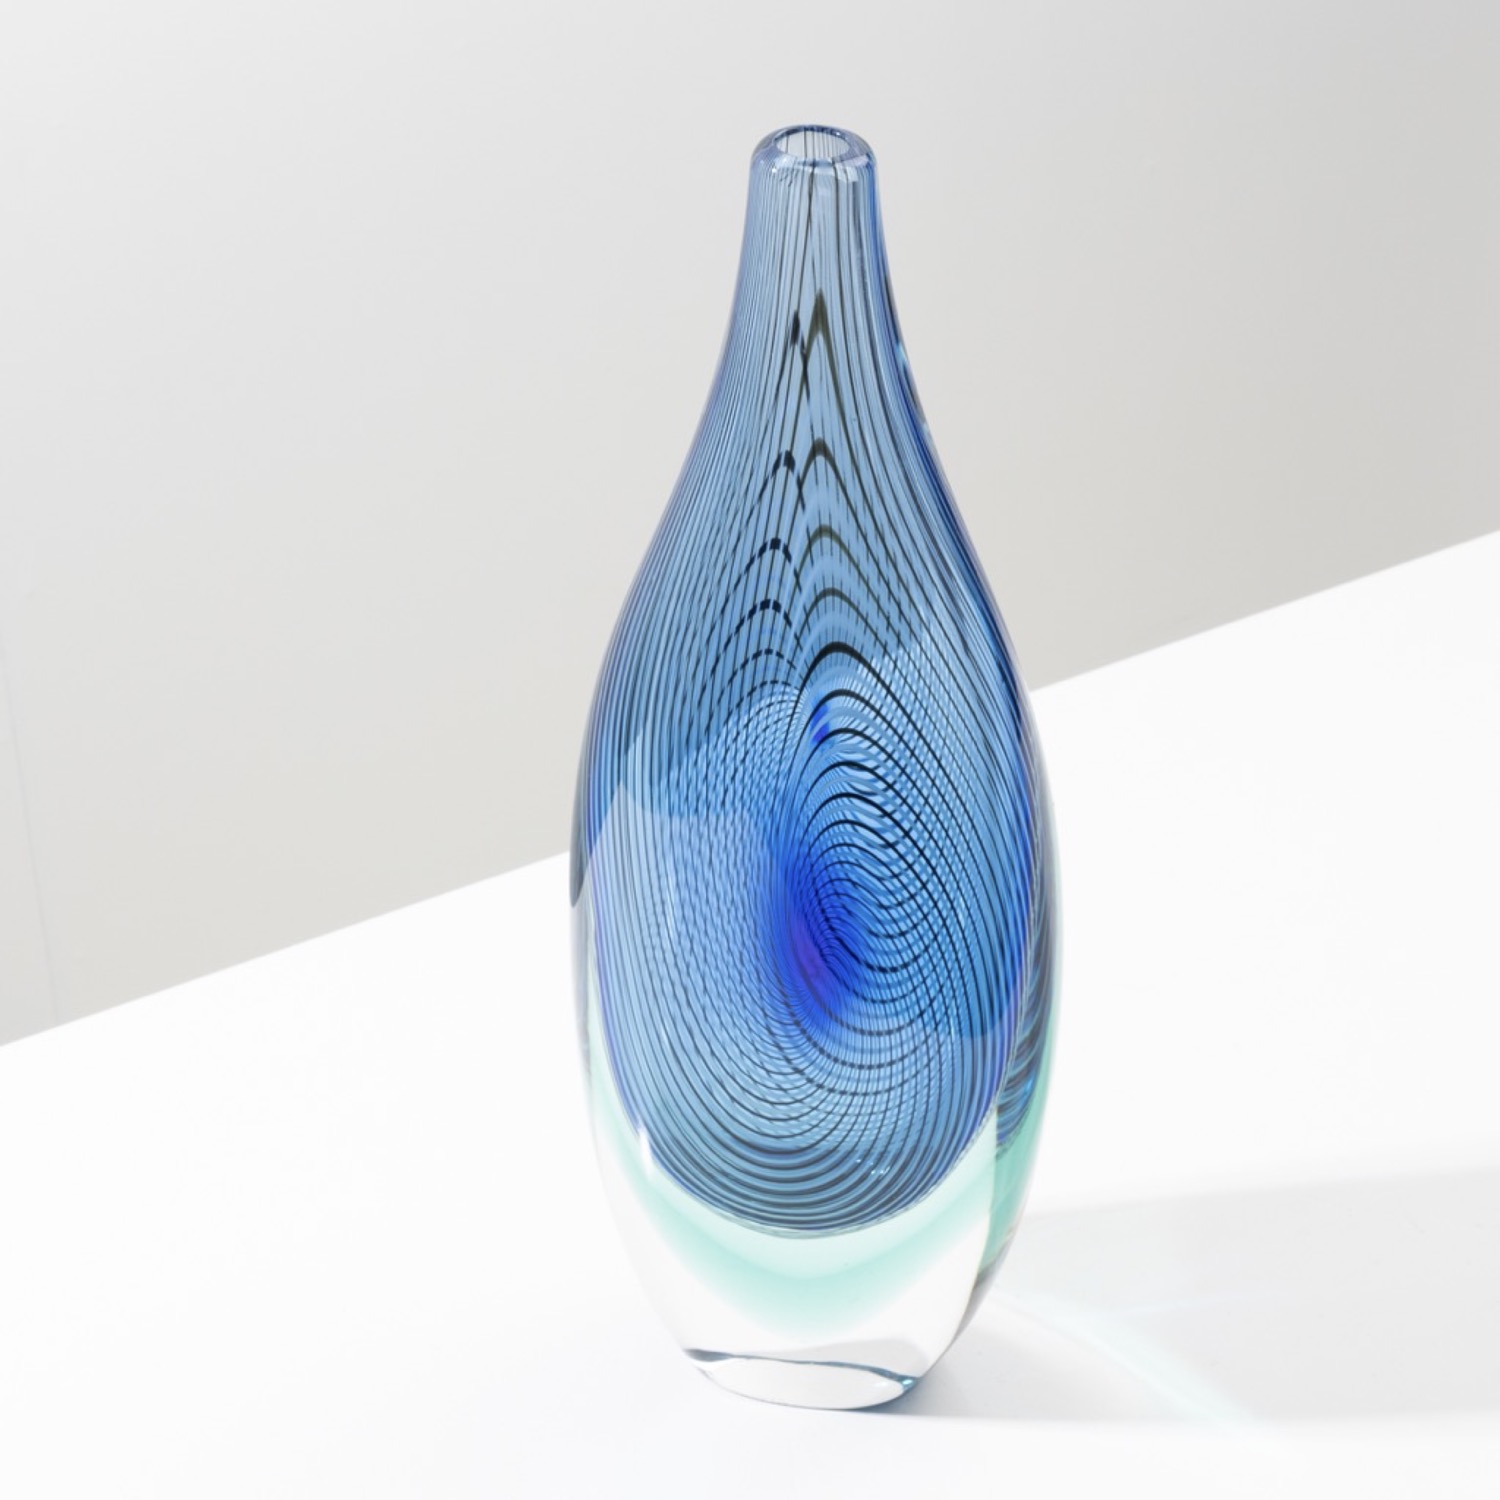 UF03_21 Capo Nord Sommerso blown glass vase Seguso Vetri d'Arte-1